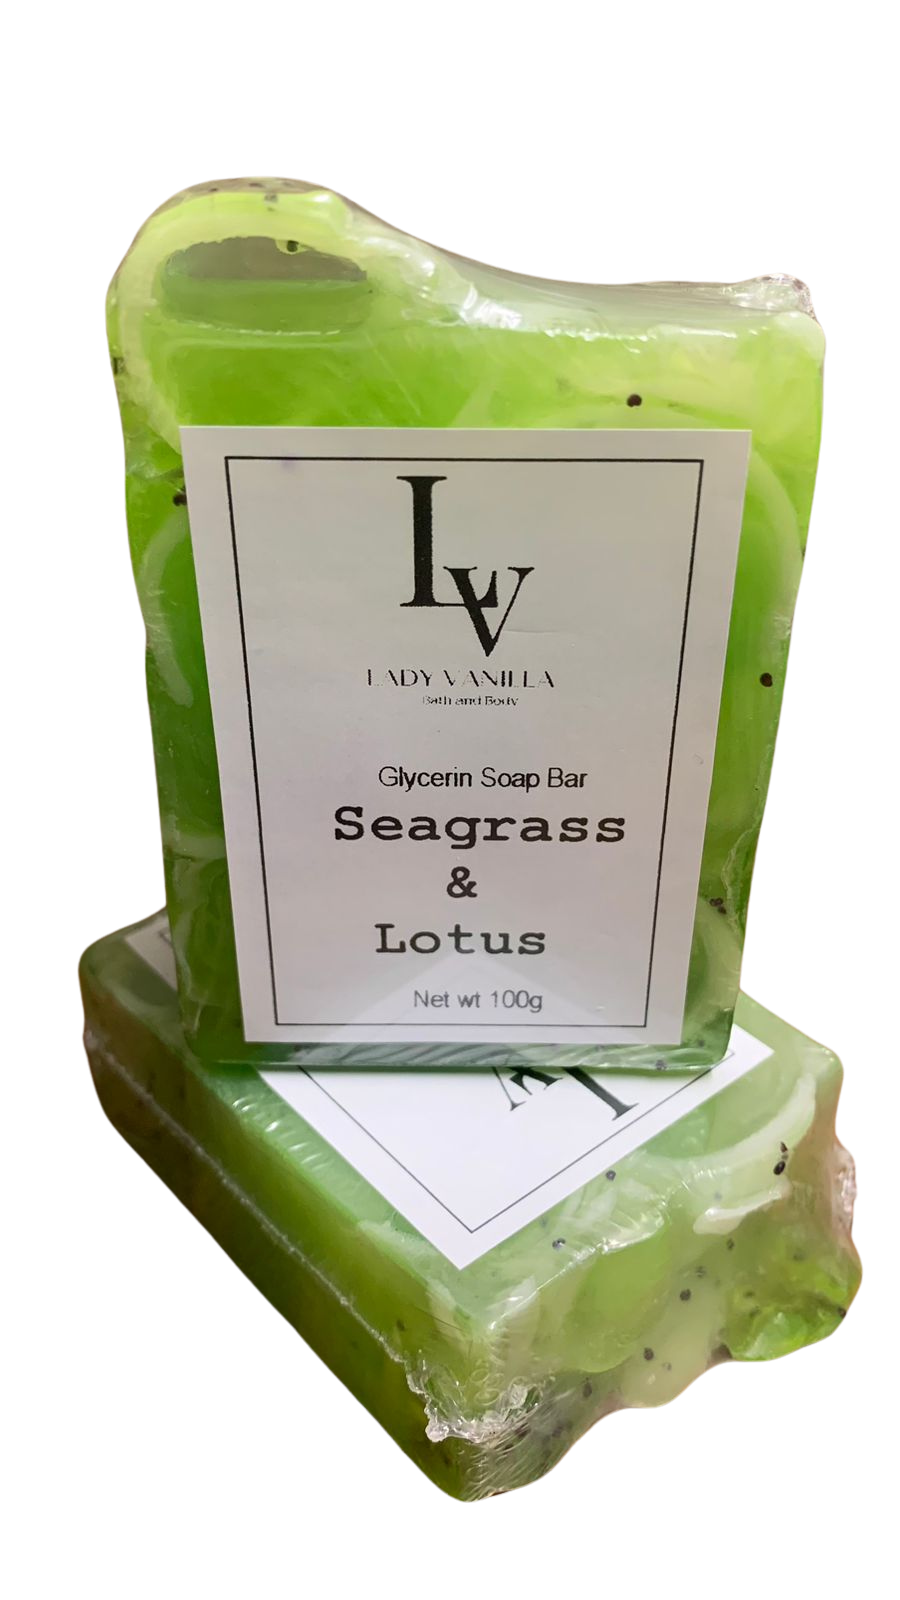 Seagrass & Lotus Glycerin Soap Bar